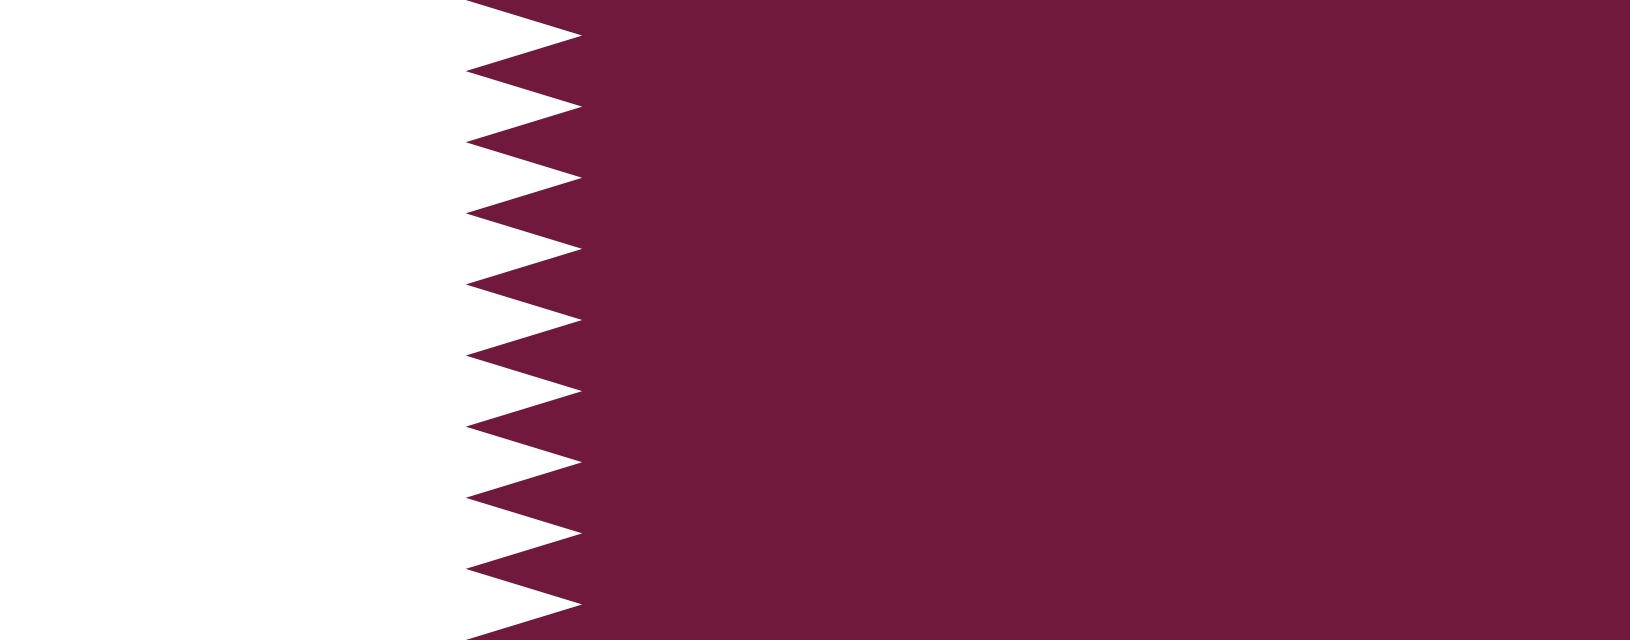 Podoba nacionalno zastavo države Qatar v resoluciji 1630x640